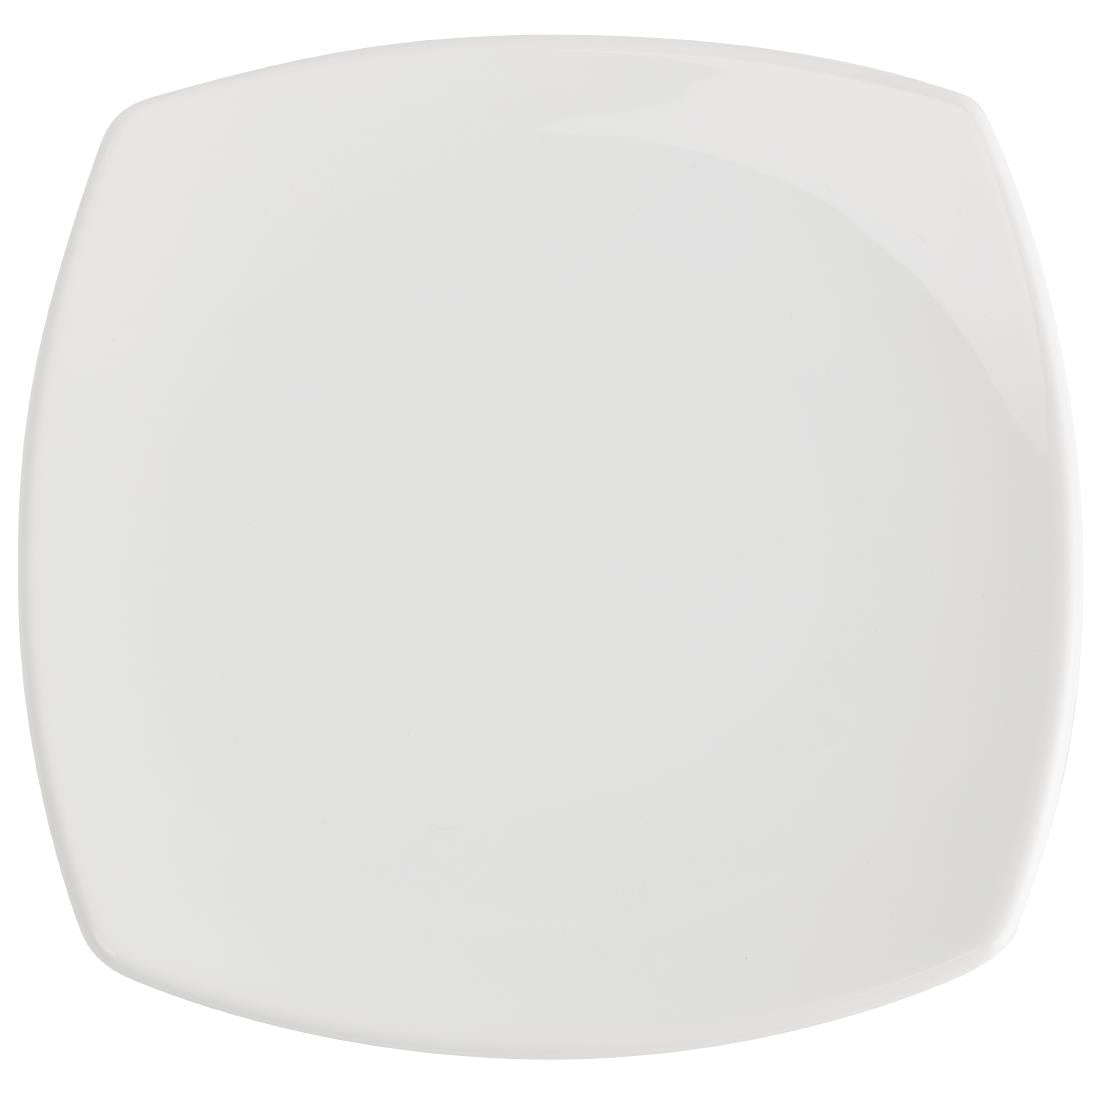 CG079 Royal Porcelain Kana Square Plates 160mm (Pack of 12)